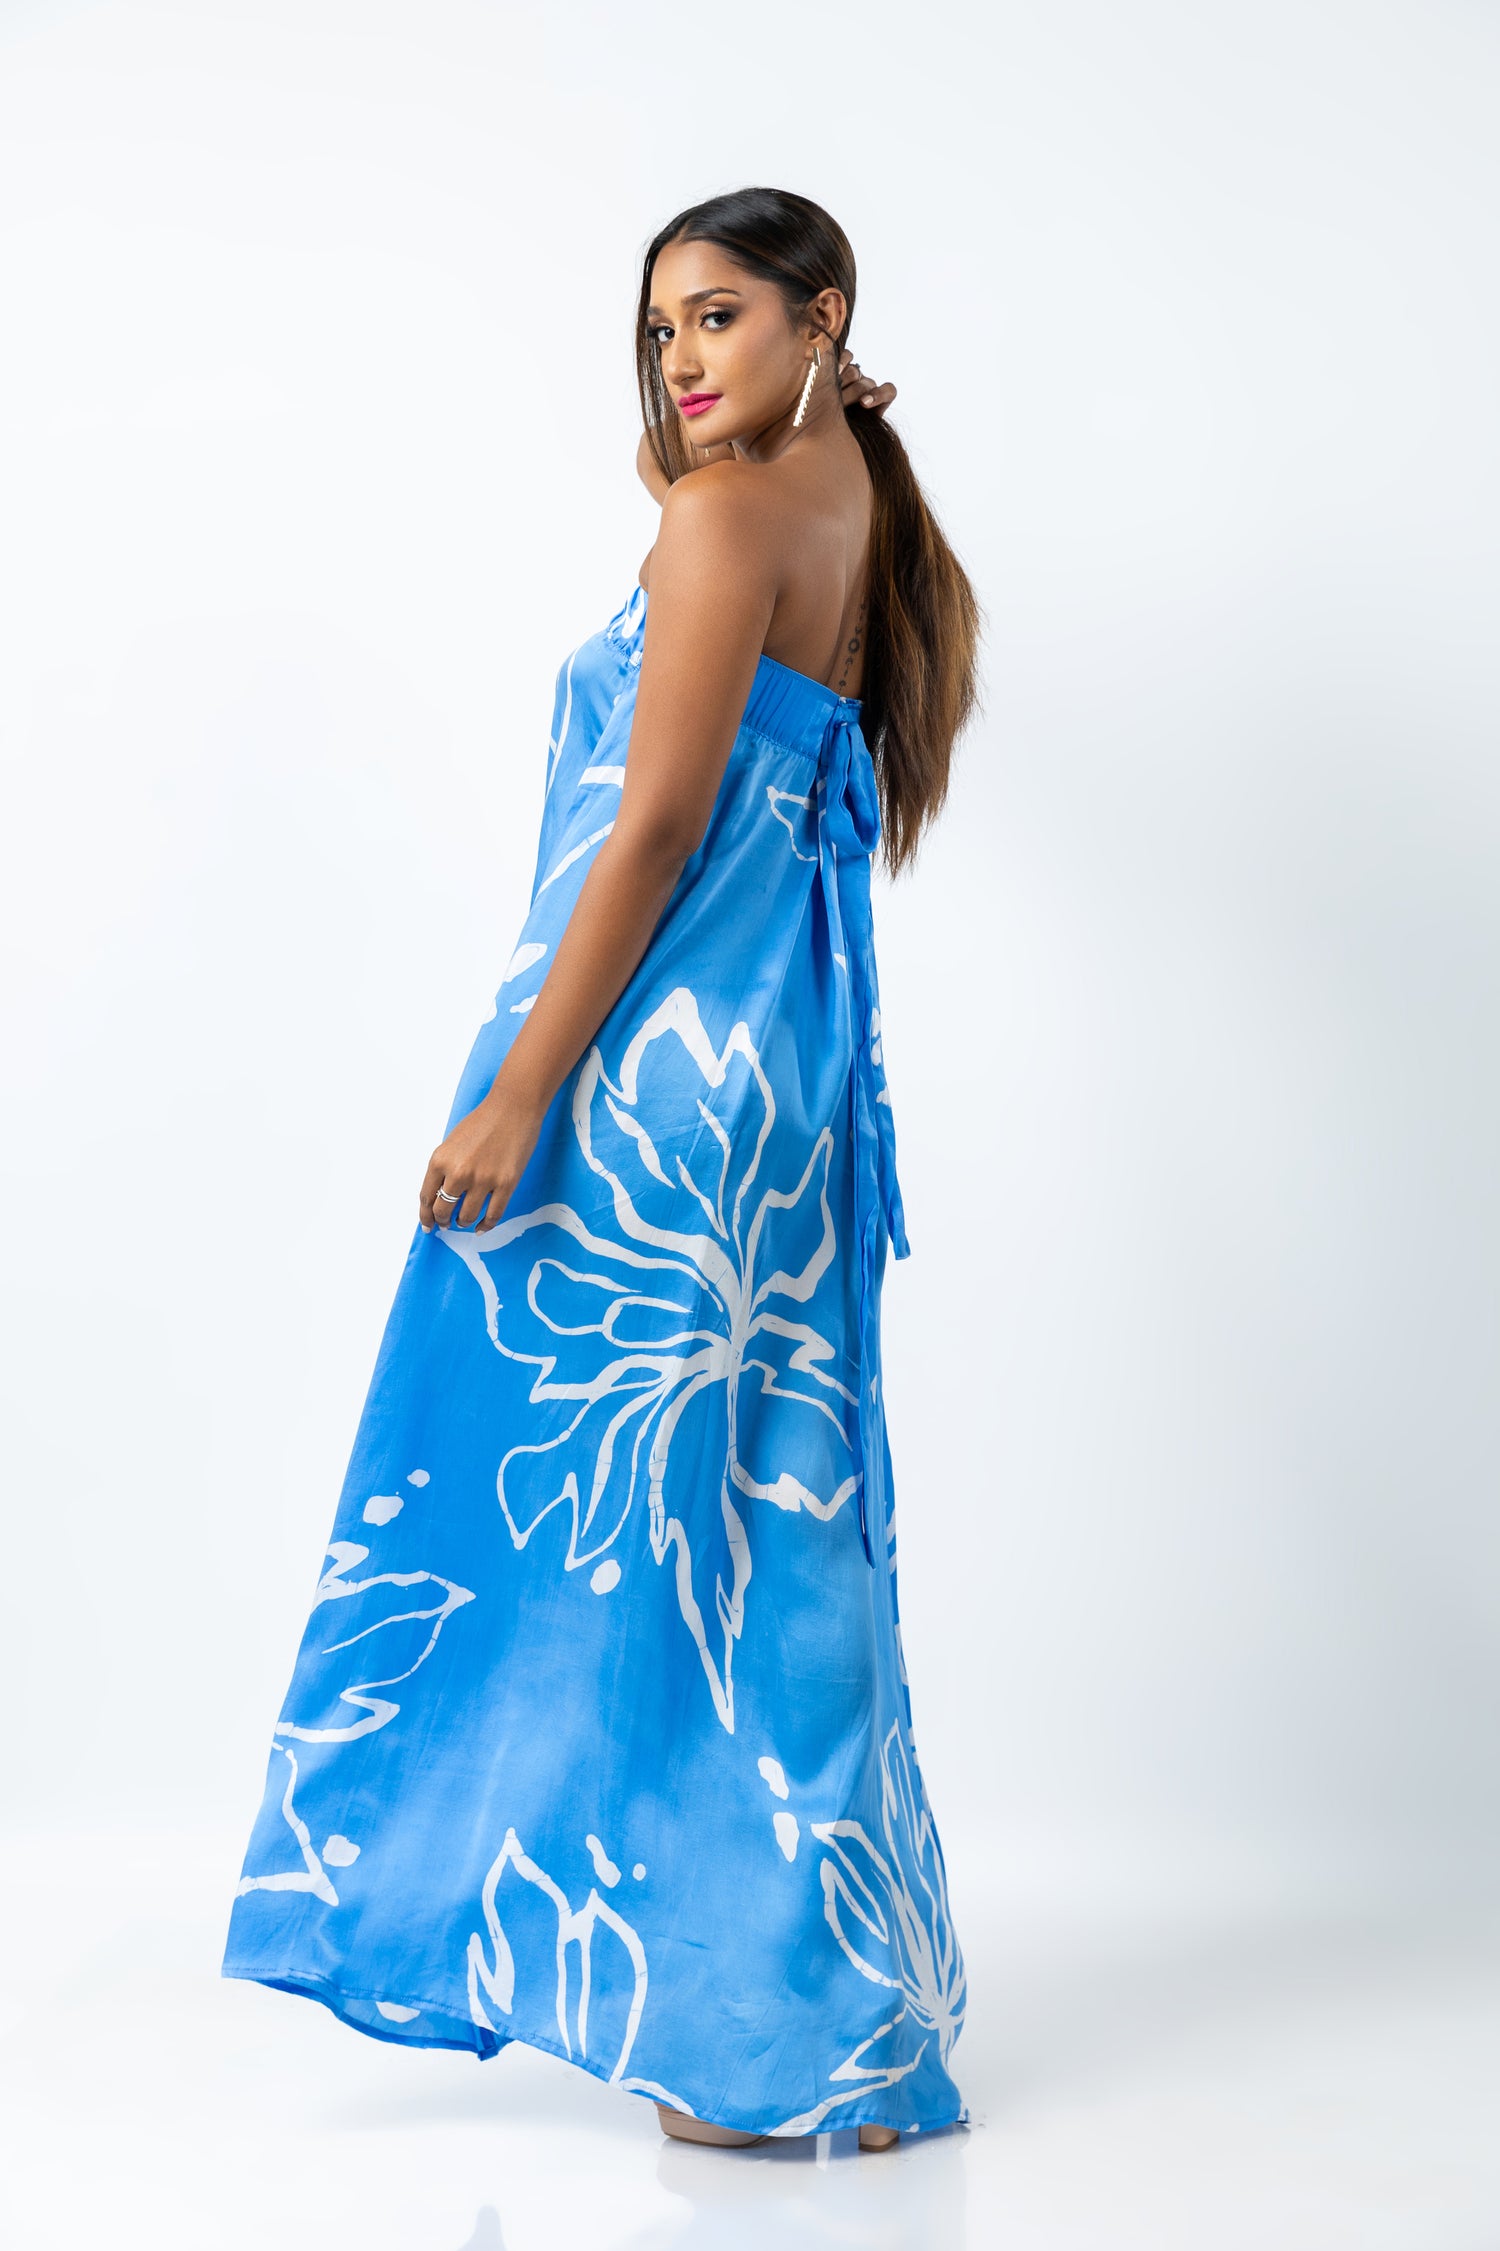 Ravishing Blue Floral Tube Dress